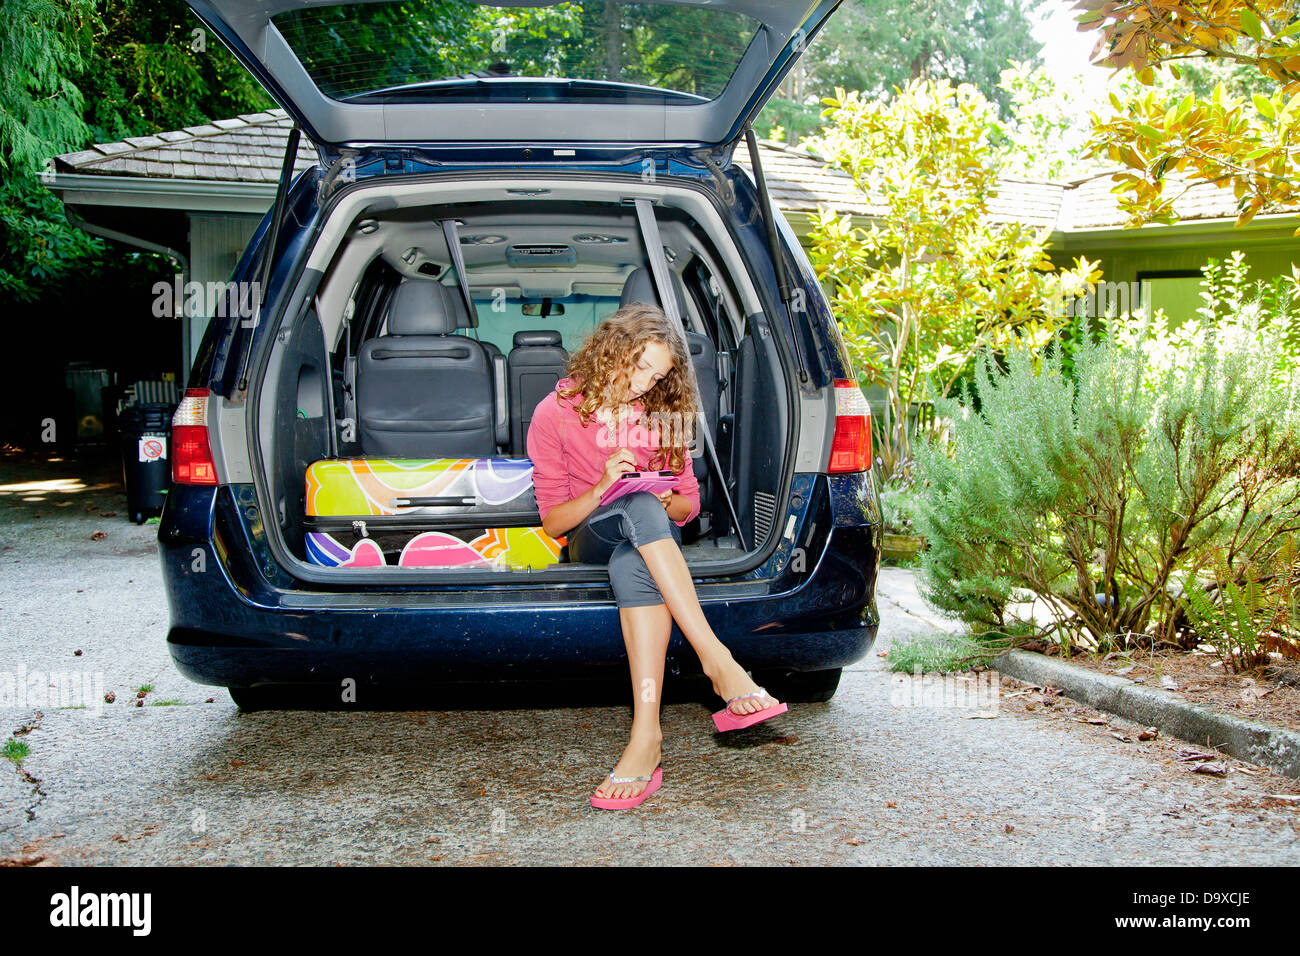 Teen girl with luggage in car Stock Photo